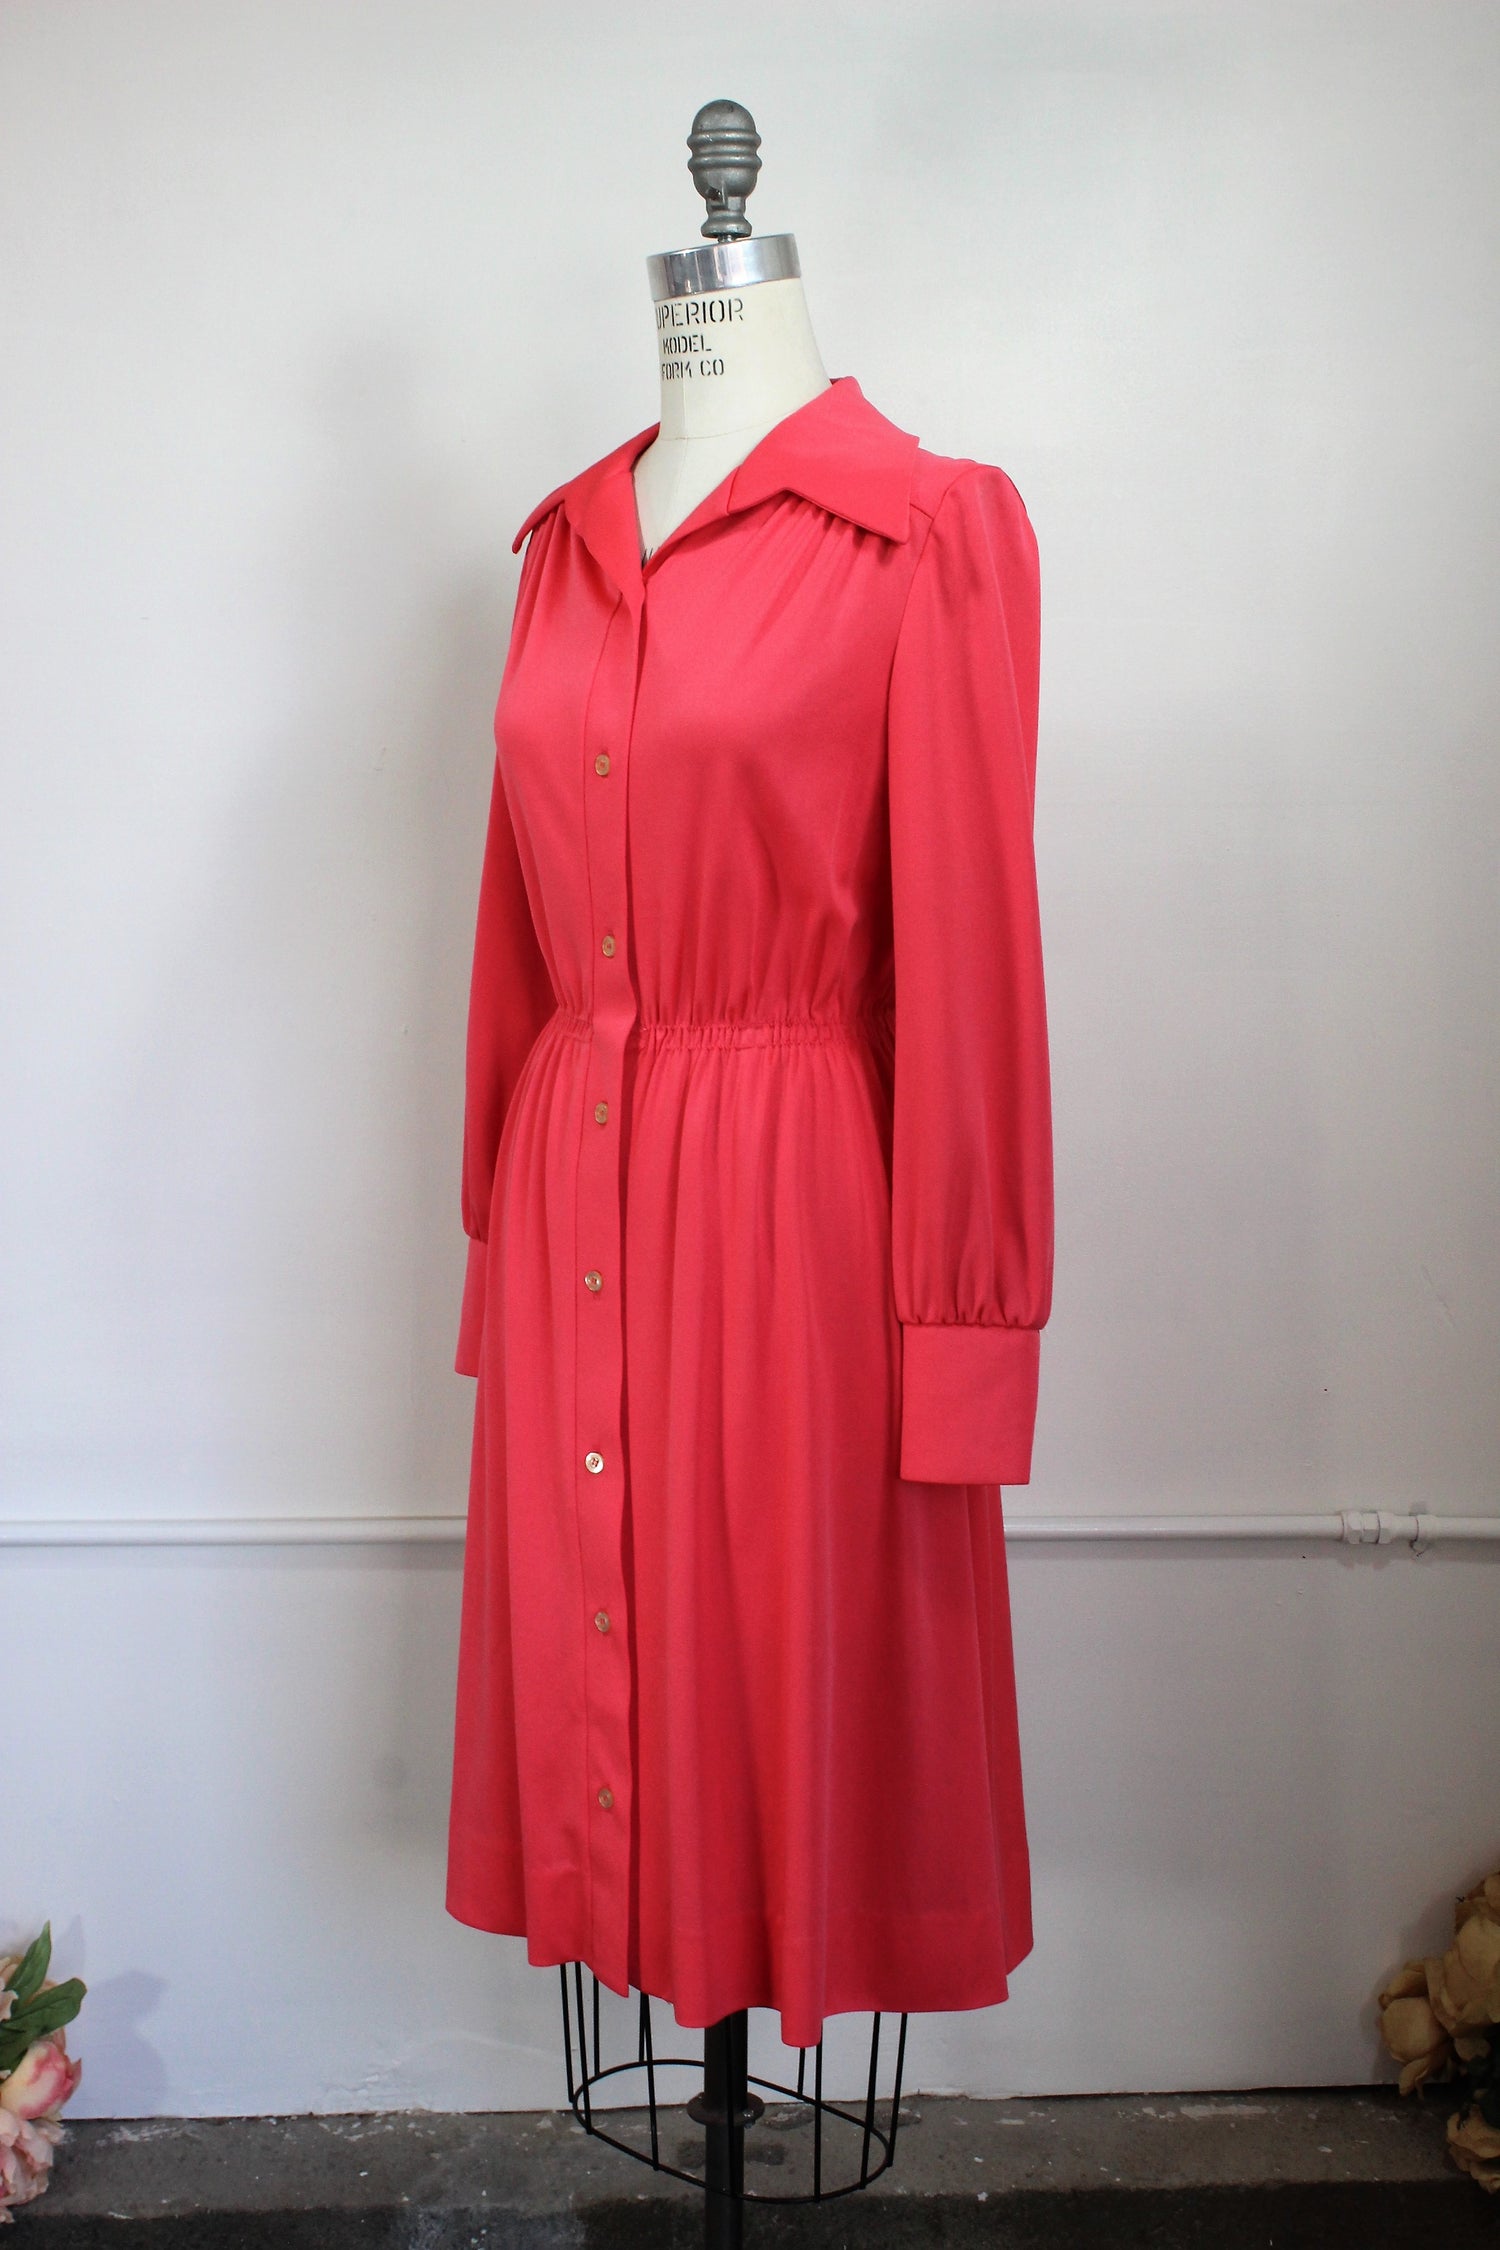 Vintage 1970s Shirtwaist Dress by Plaza South